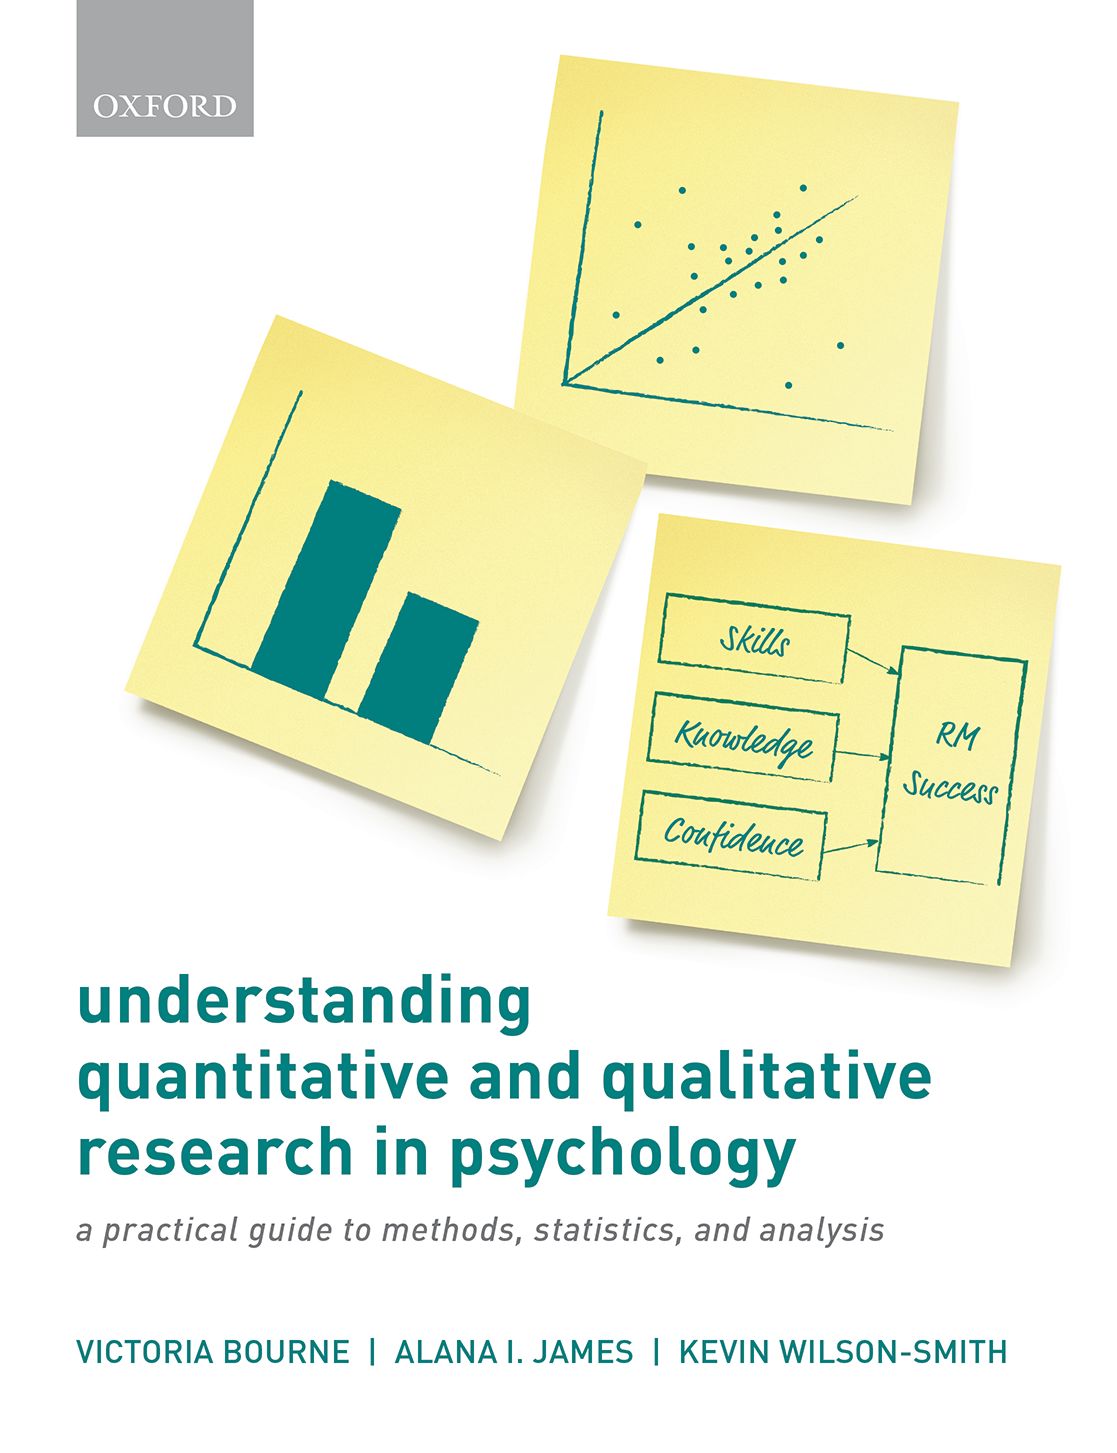 quantitative research in social psychology